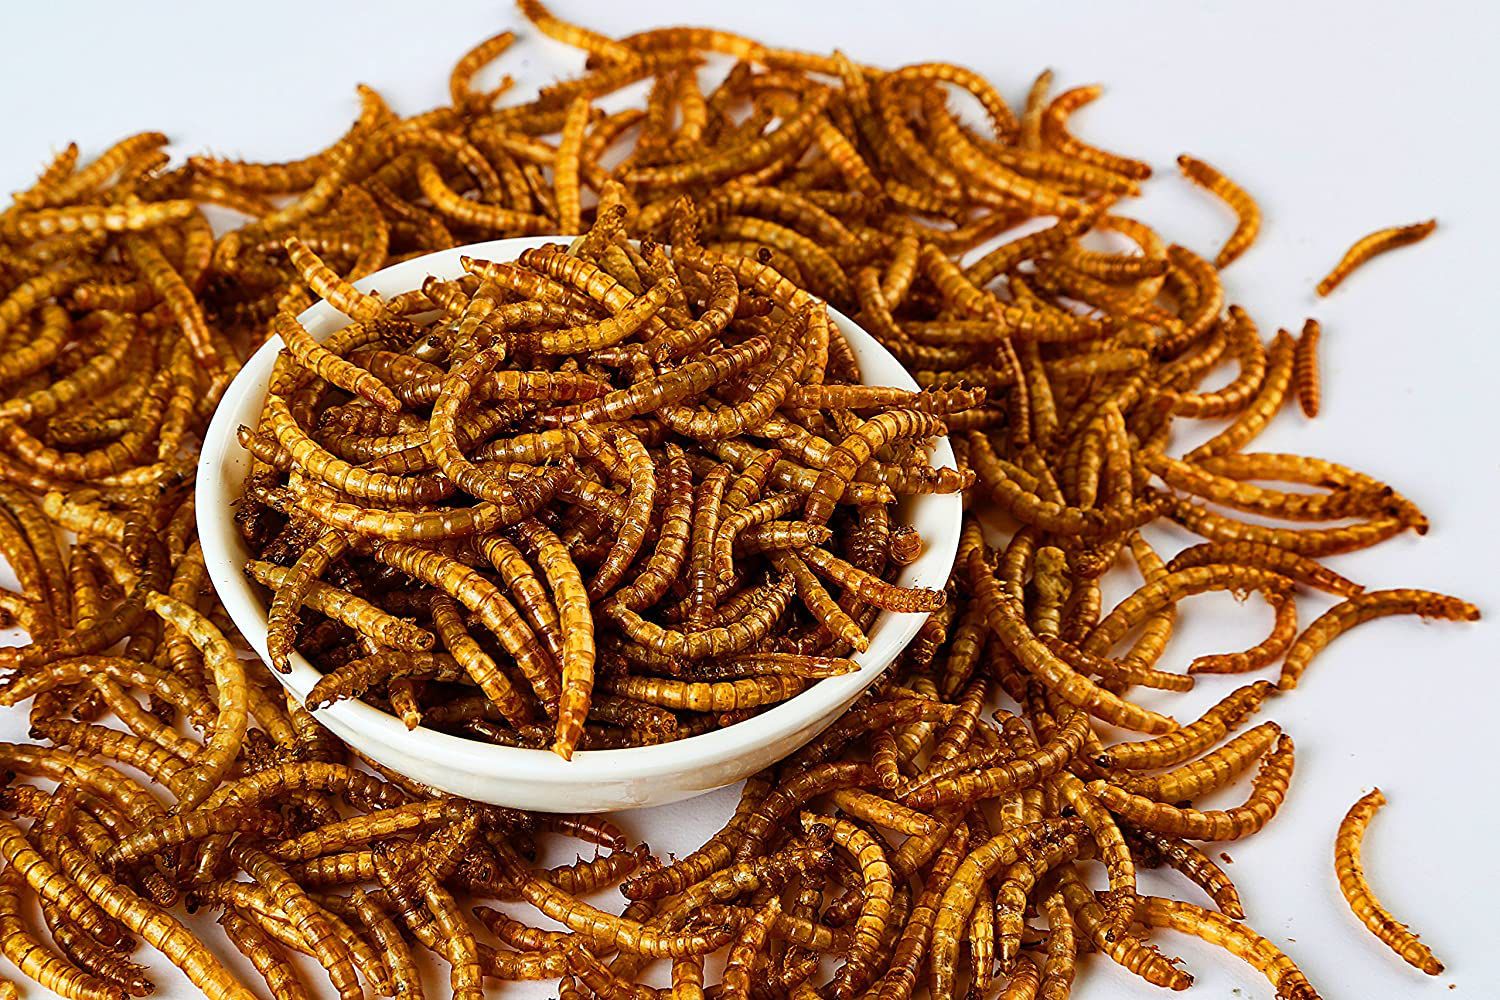 Hatortempt 5 Lbs Non-Gmo Dried Mealworms-High-Protein Mealworms for Wild Bird,Chicken, Ducks,Fish,Reptile, Tortoise, Amphibian,Lizard